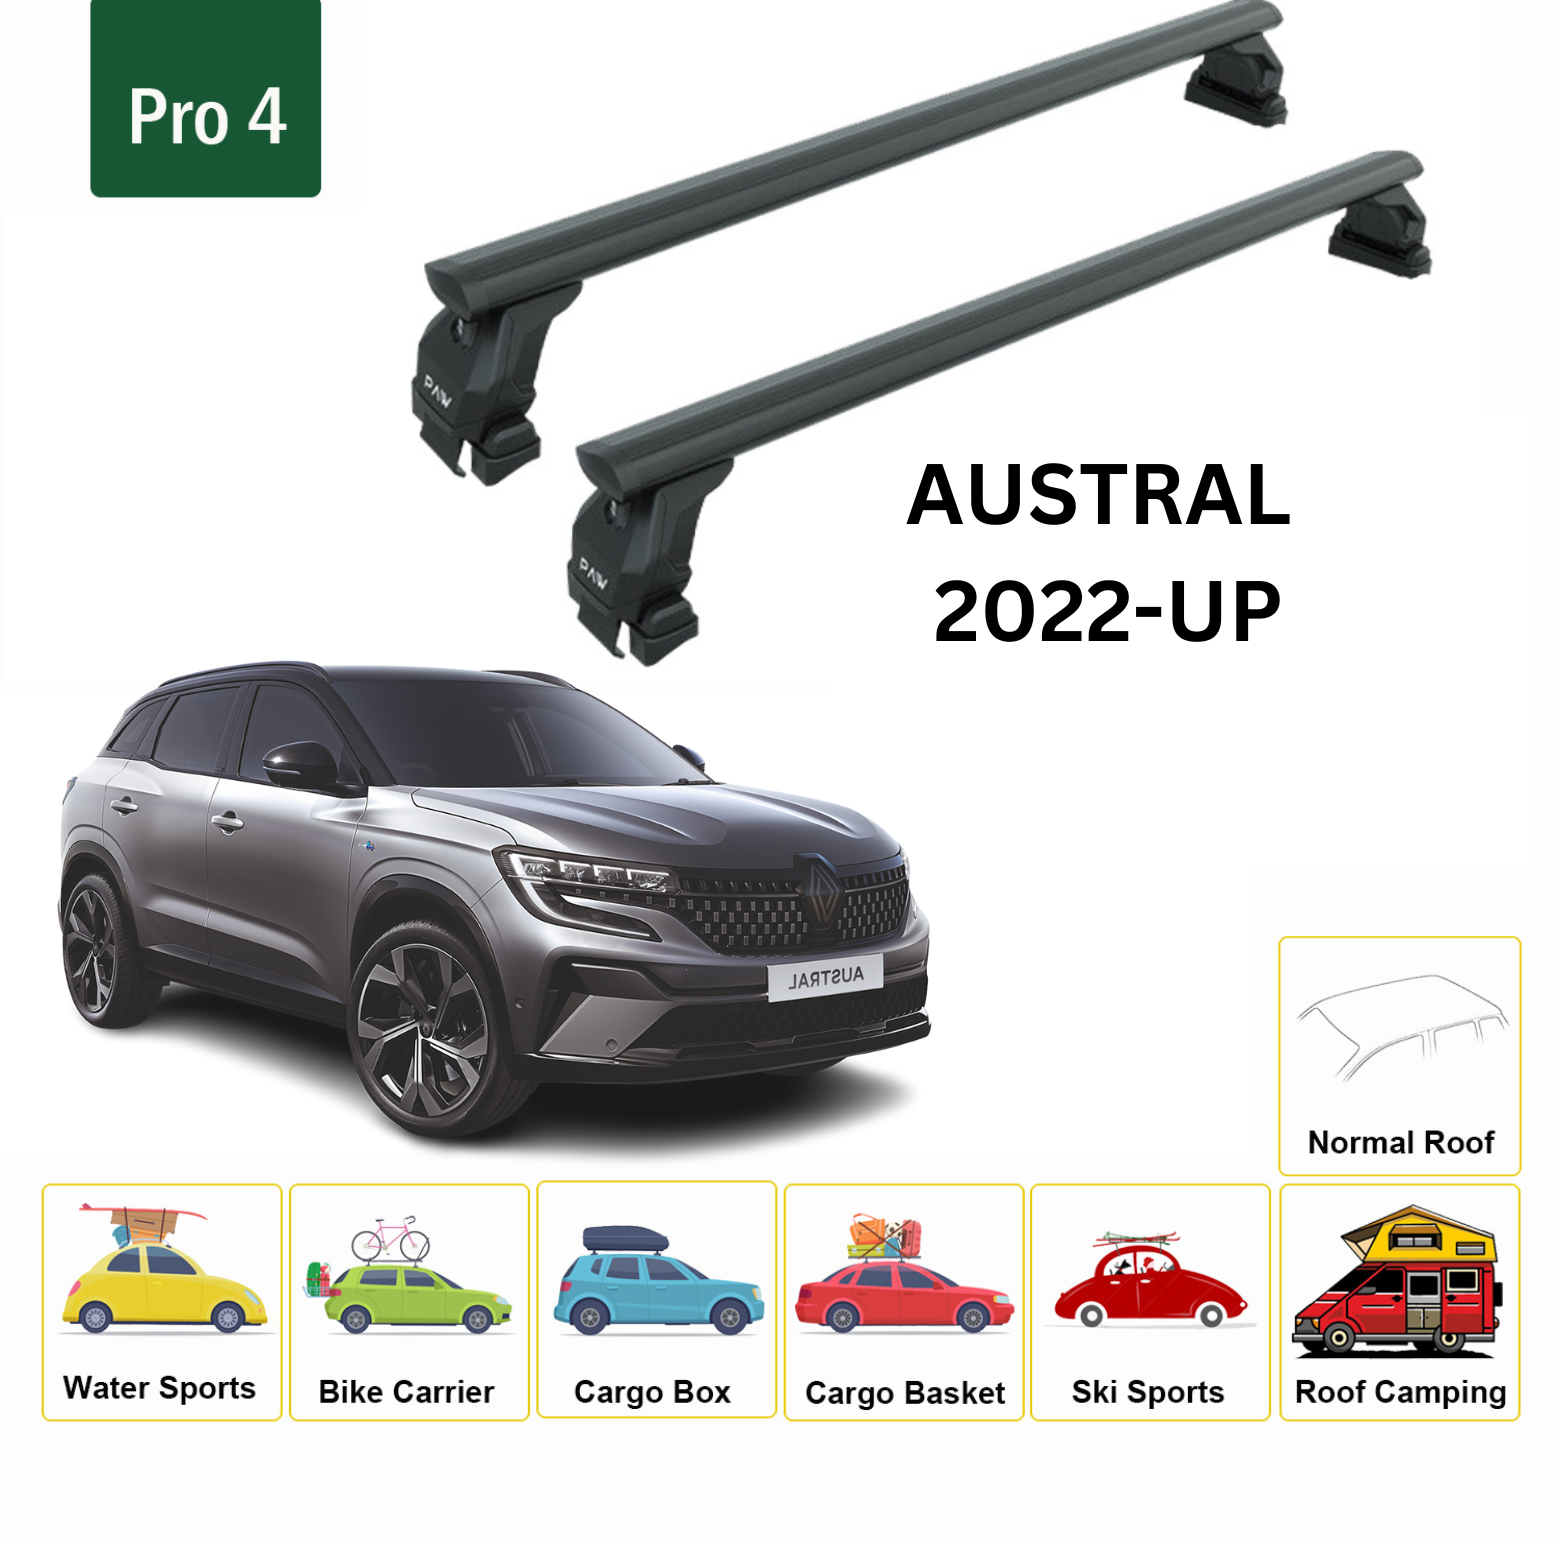 For Renault Austral 2022-Up Roof Rack System, Aluminium Cross Bar, Metal Bracket, Normal Roof, Black - 0